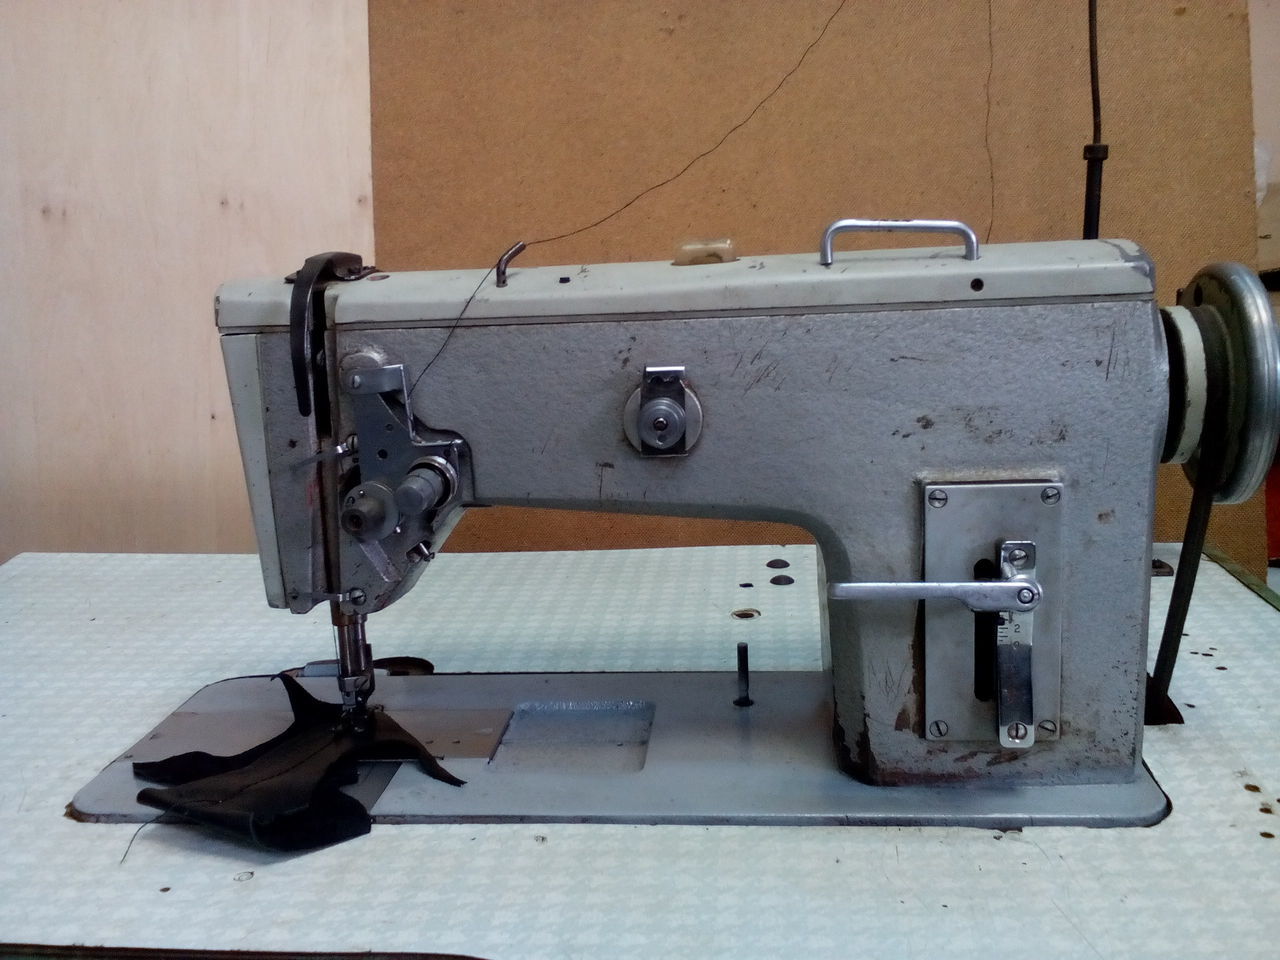 Авито машинка промышленная. Промышленная швейная машинка кл 862. Промышленная швейная ПМЗ 862. Промышленная швейная машина ПМЗ 22. Промышленная швейная машина м122.